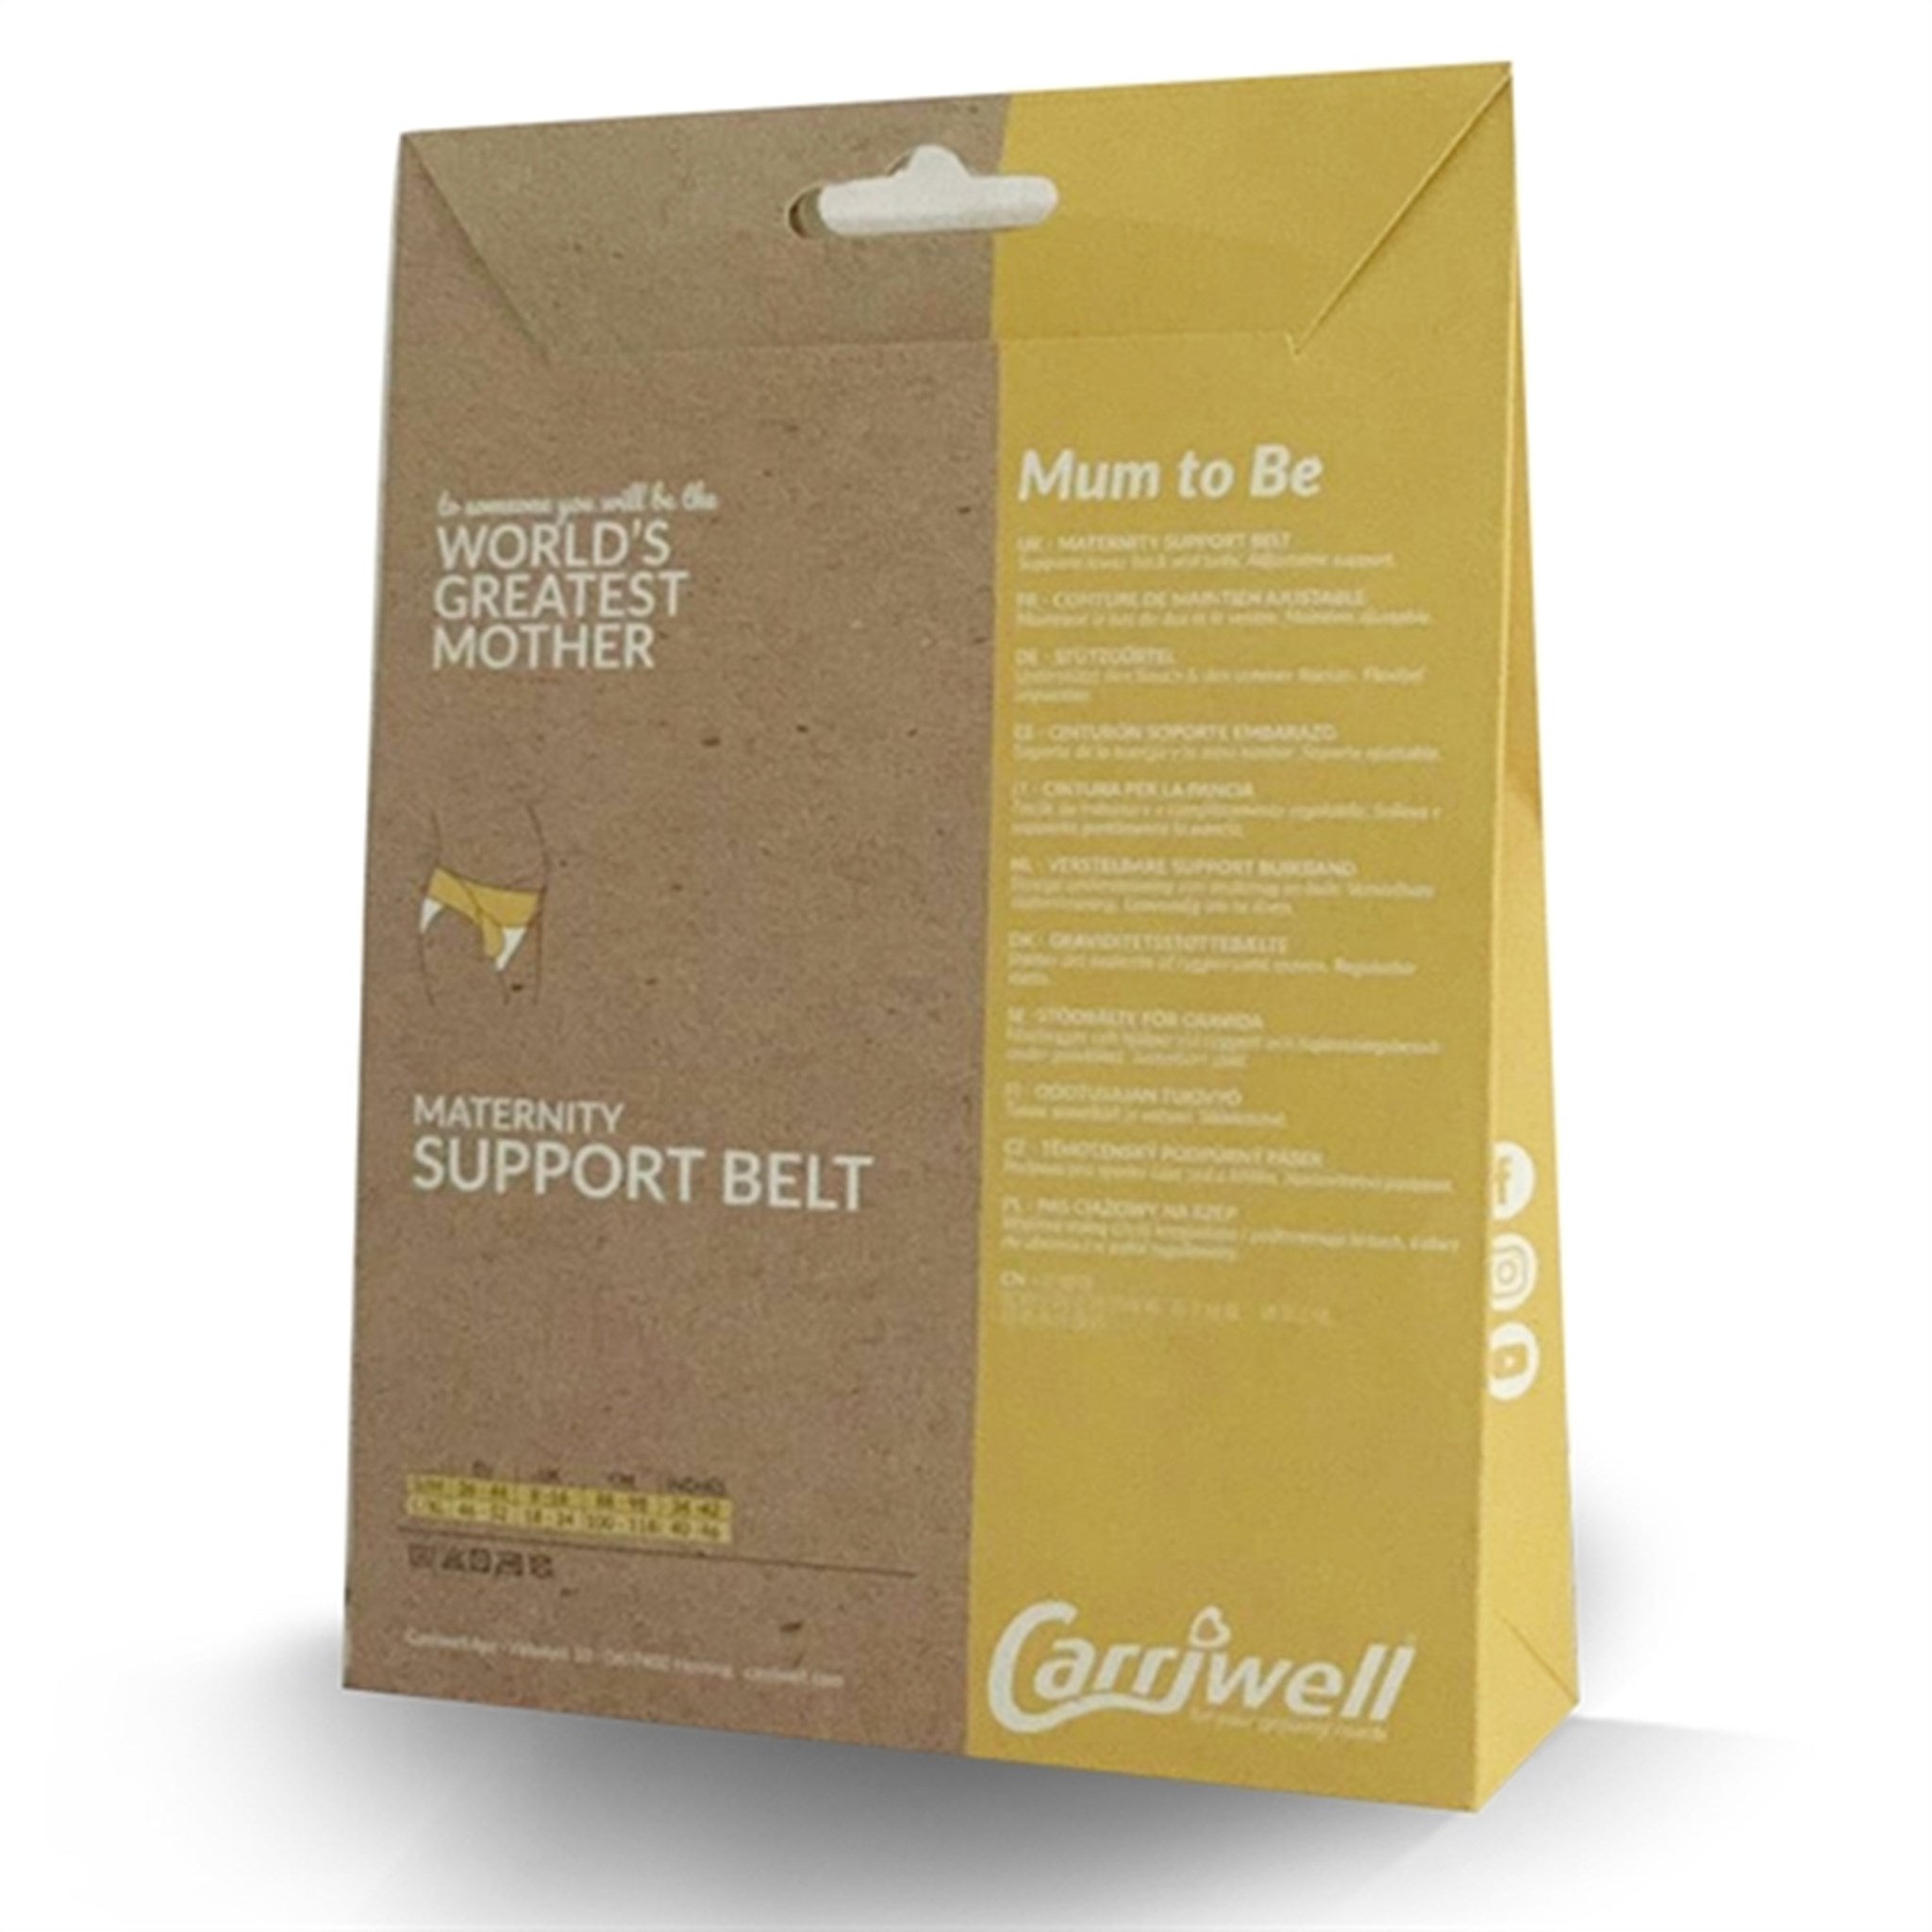 Carriwell Maternity Support Belt White 7